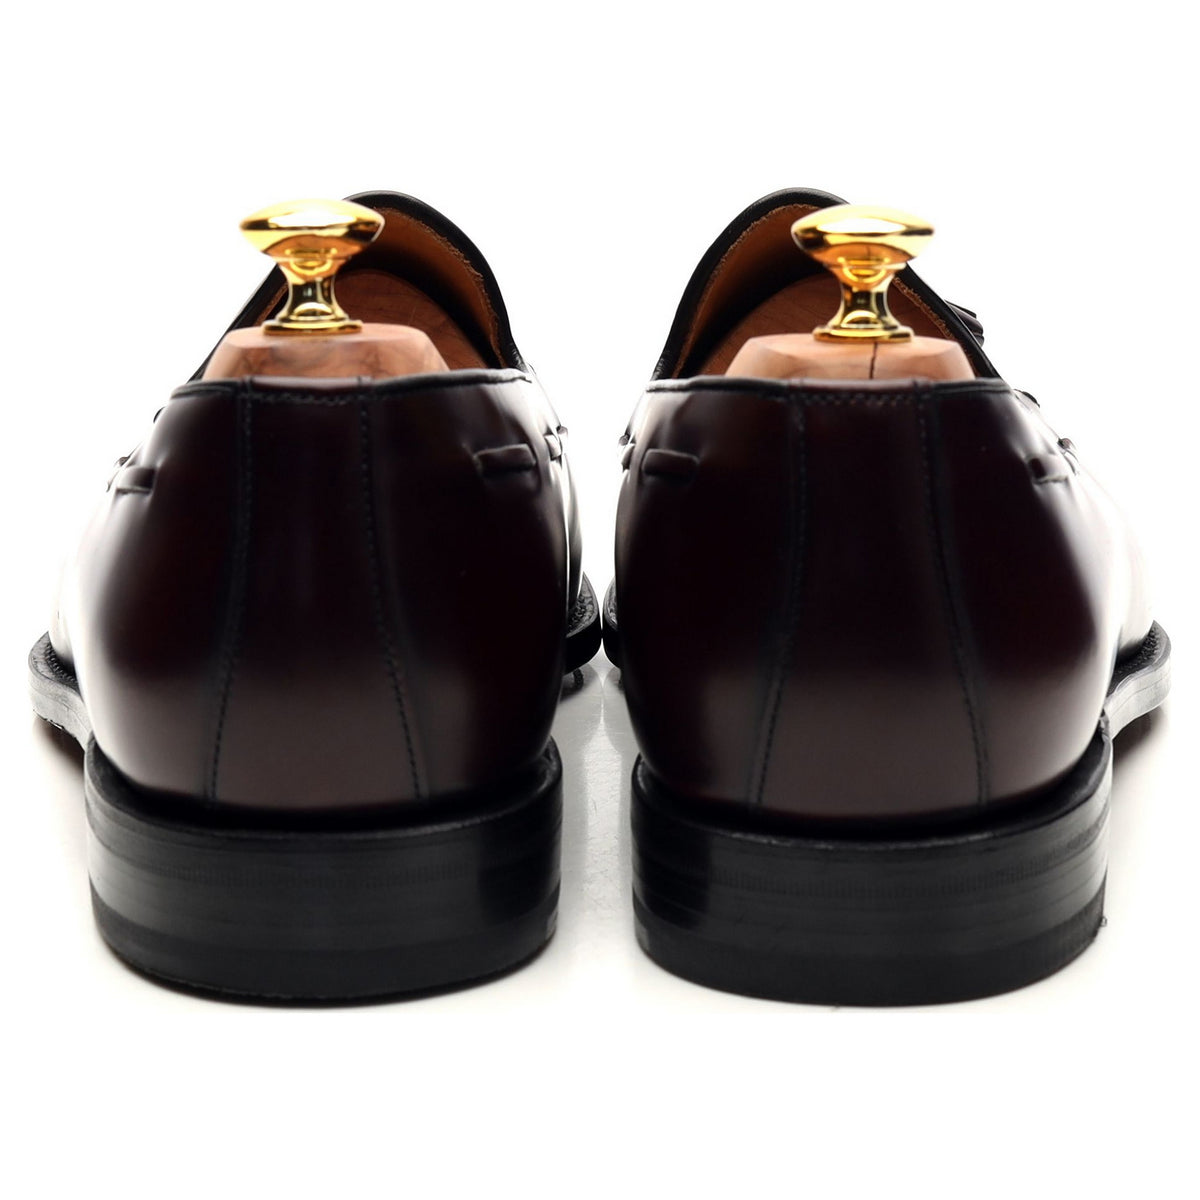 &#39;Barcelona&#39; Burgundy Leather Tassel Loafers UK 12 F